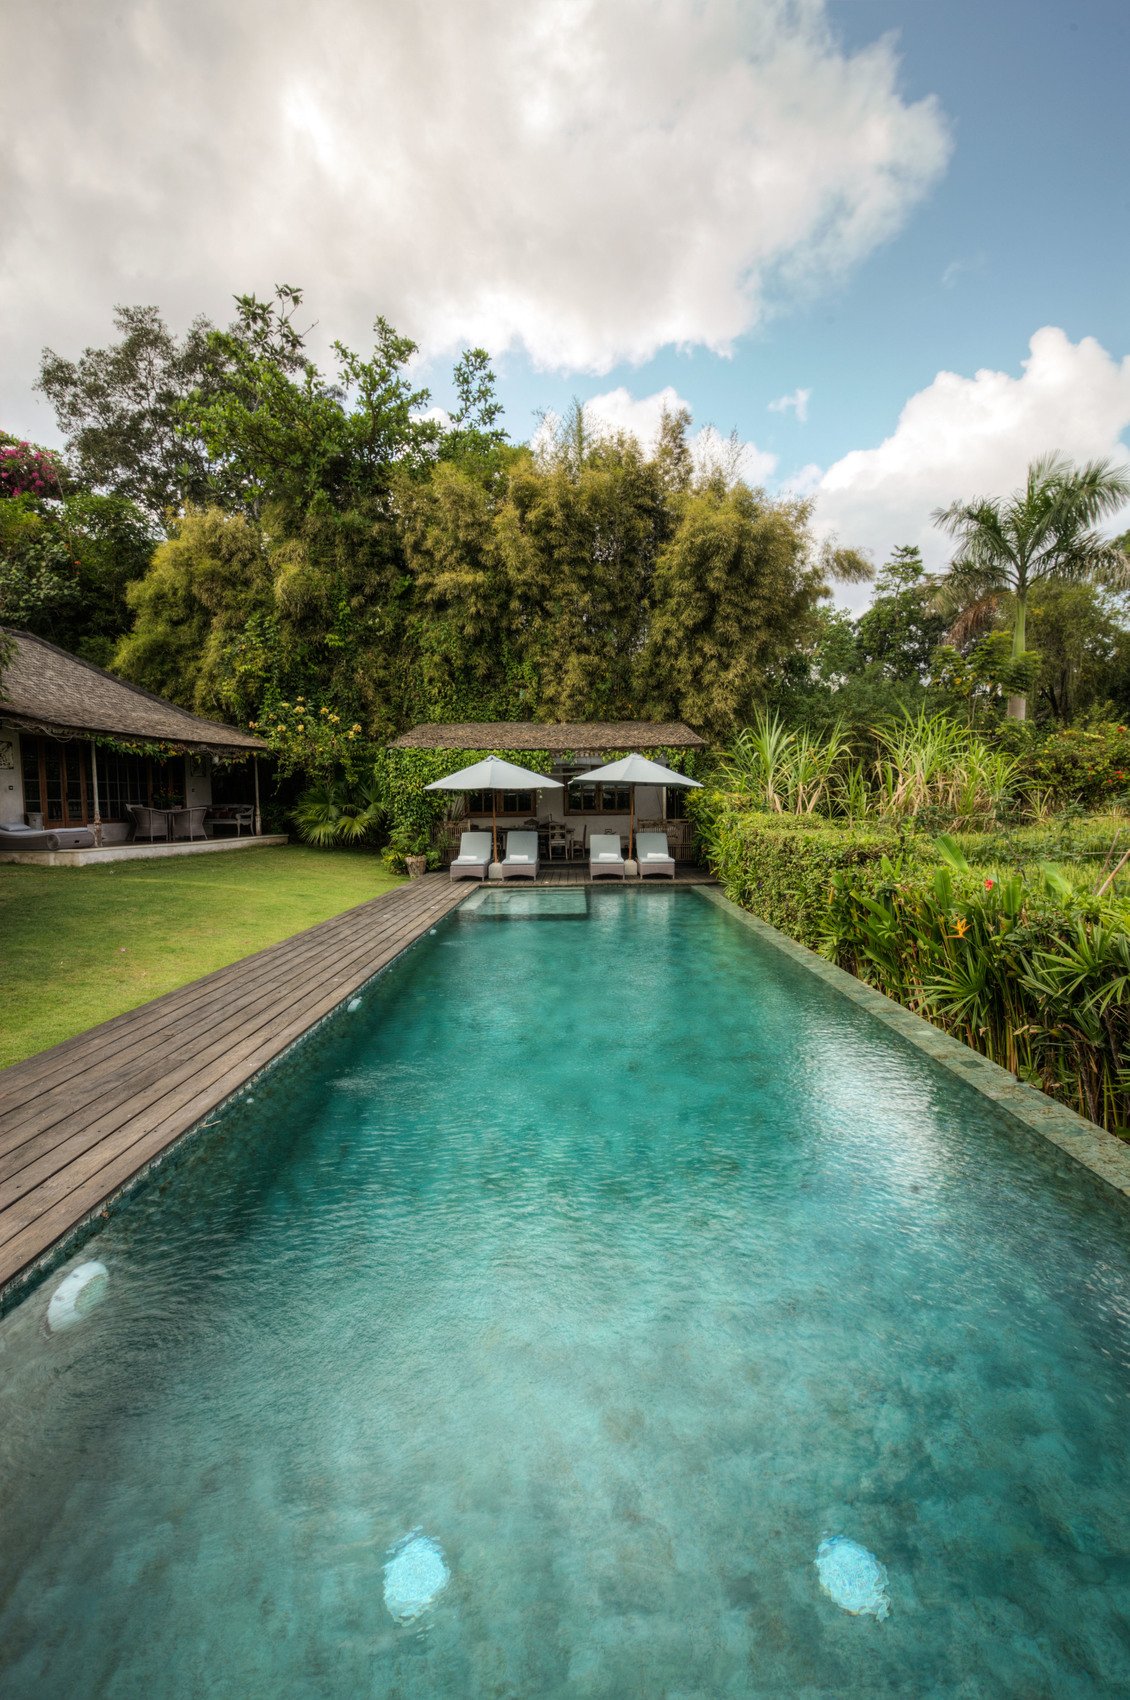 Villa Artis - luxury villa Bali - 5* design hotel Bali - pool